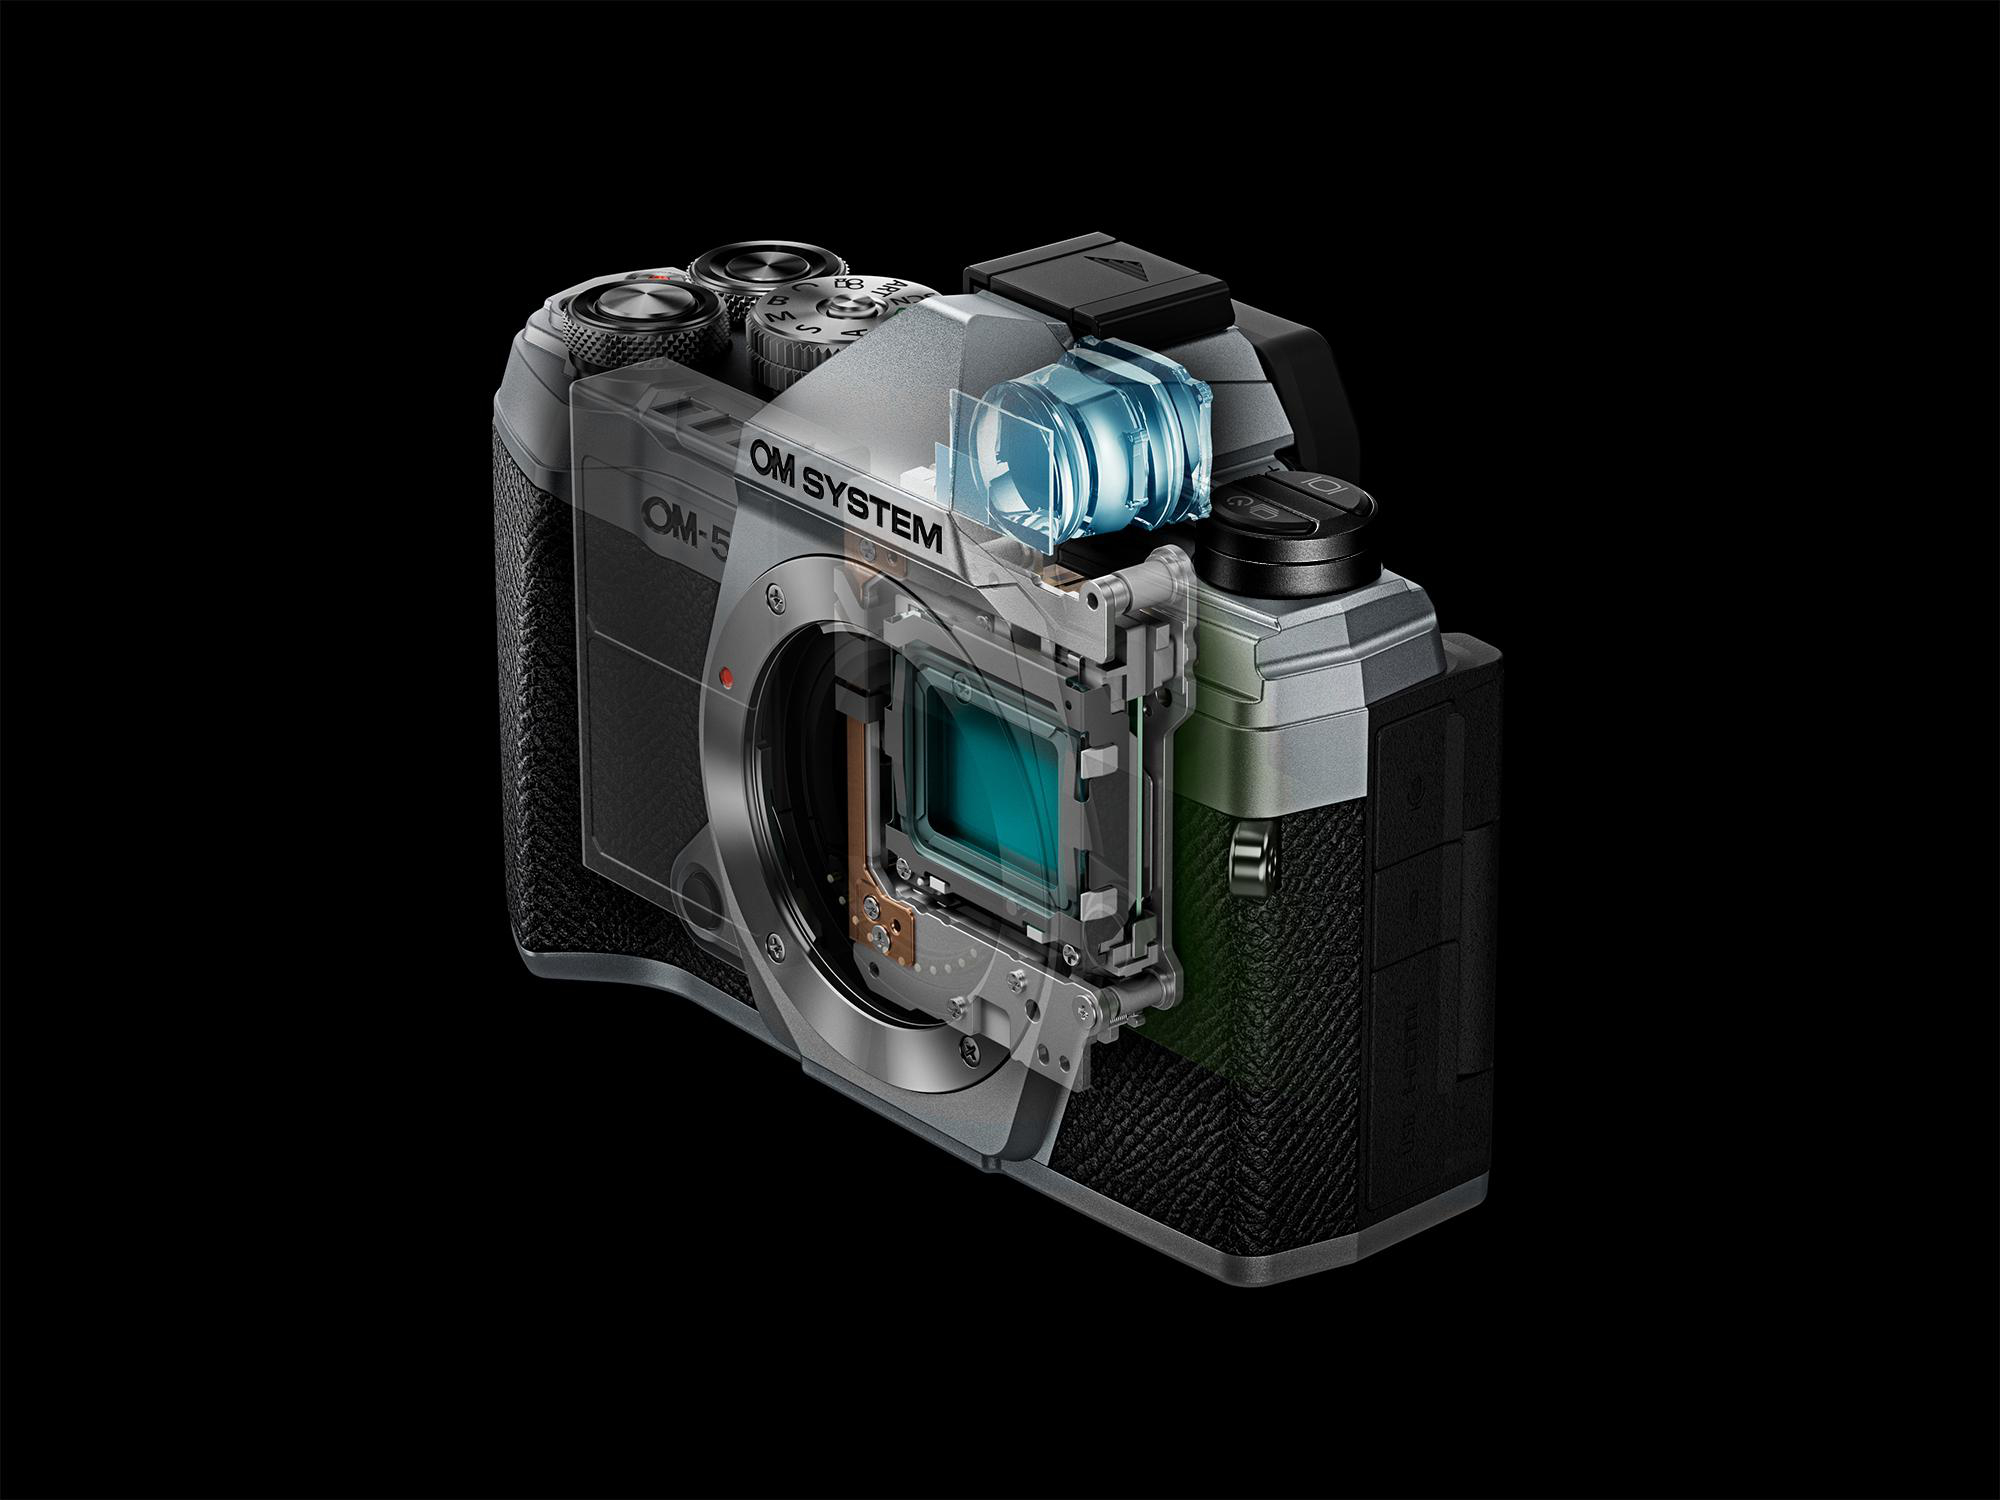 mm Kit cm WLAN Display Objektiv Systemkamera OM SYSTEM 12-45 7,6 , Touchscreen, OM-5 mit